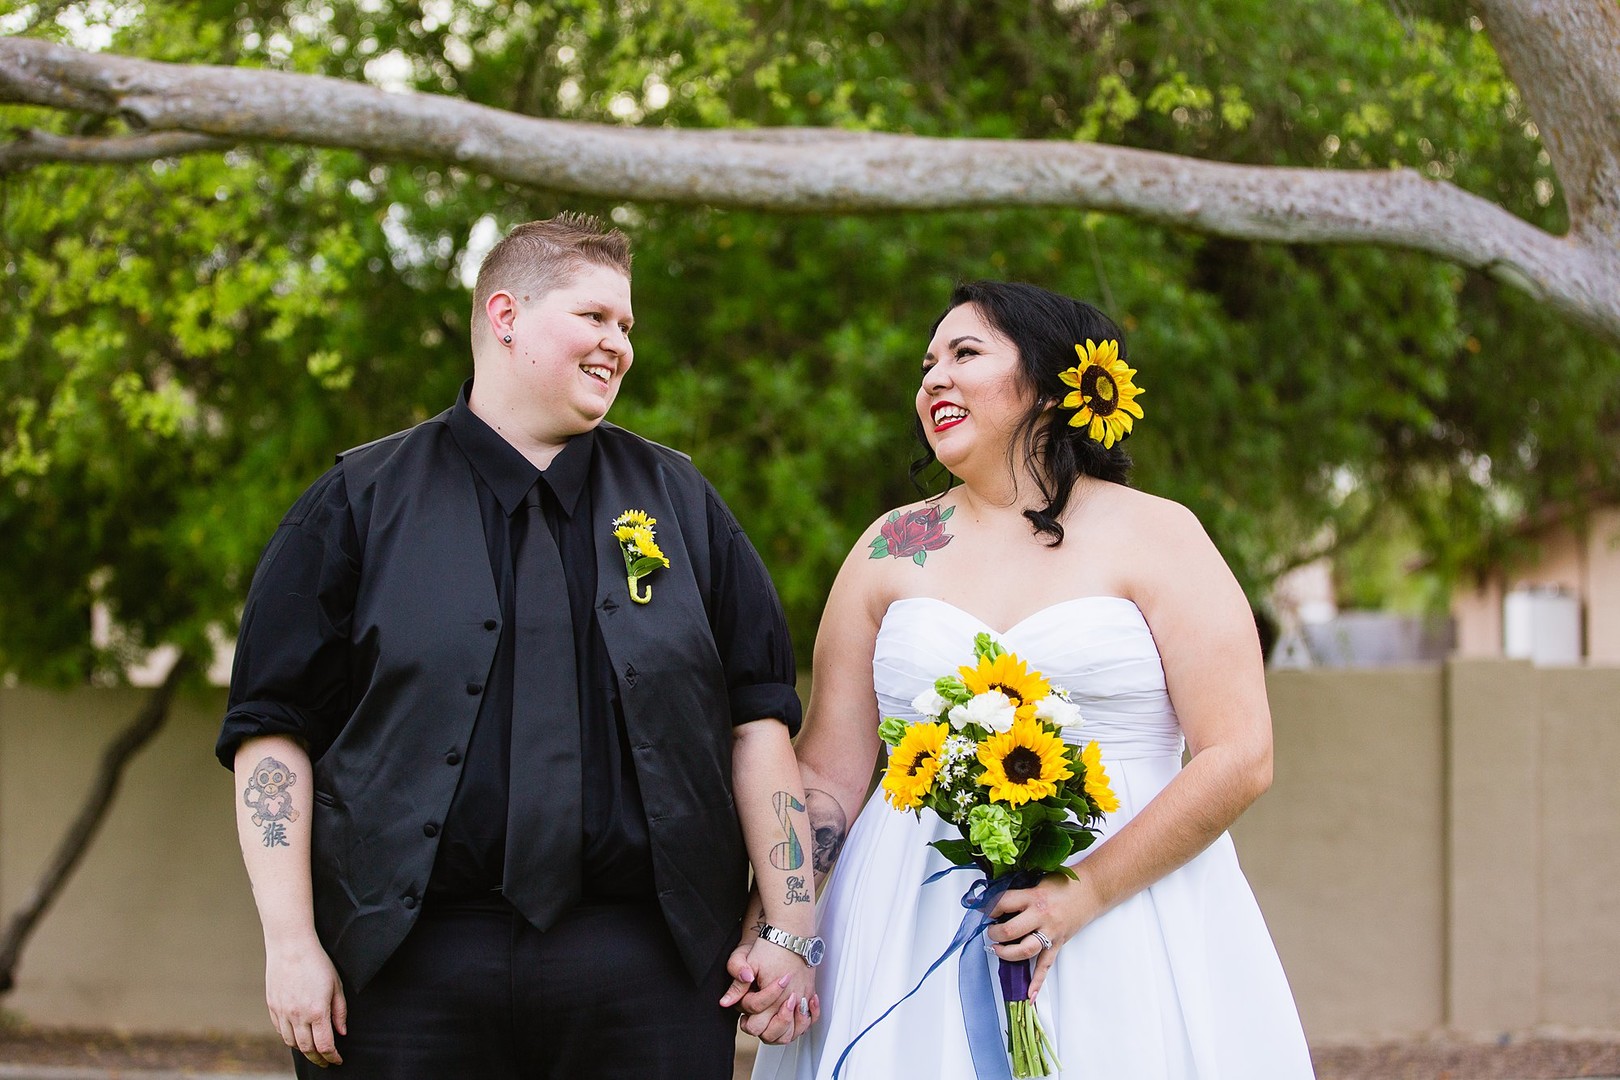 Fun and romantic Arizona backyard wedding lesbian two brides sunflowers bouquet tuxedo white dress